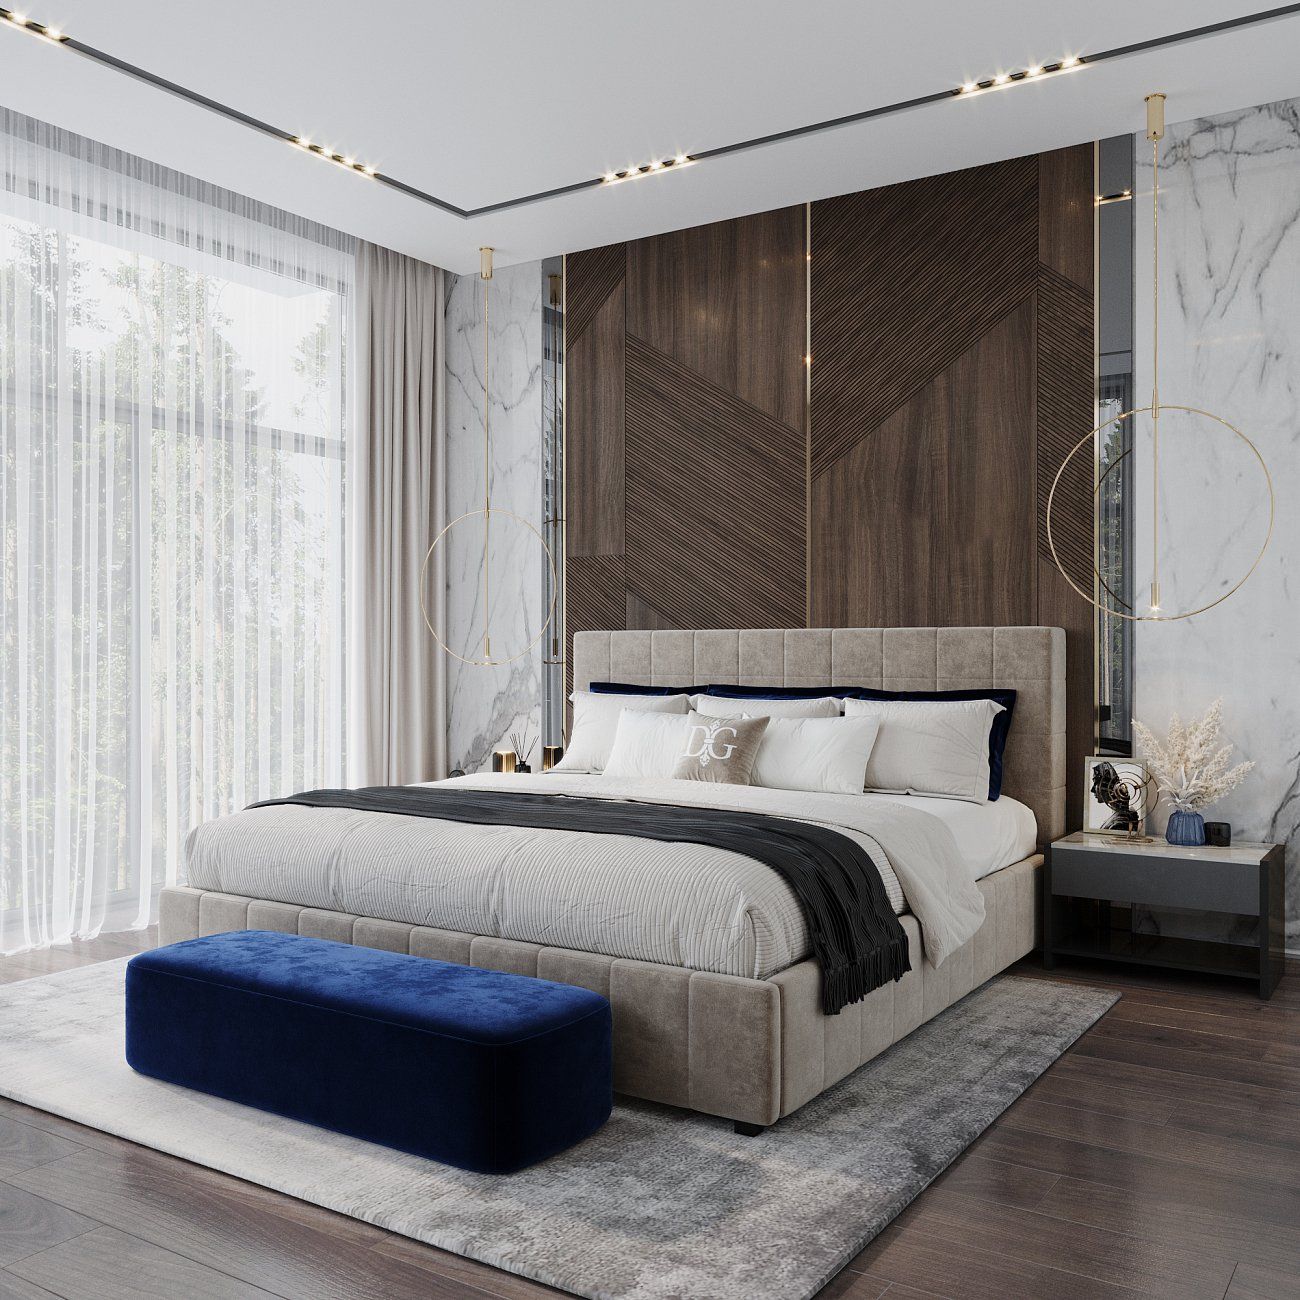 Double bed 160x200 cm blue Shining Modern